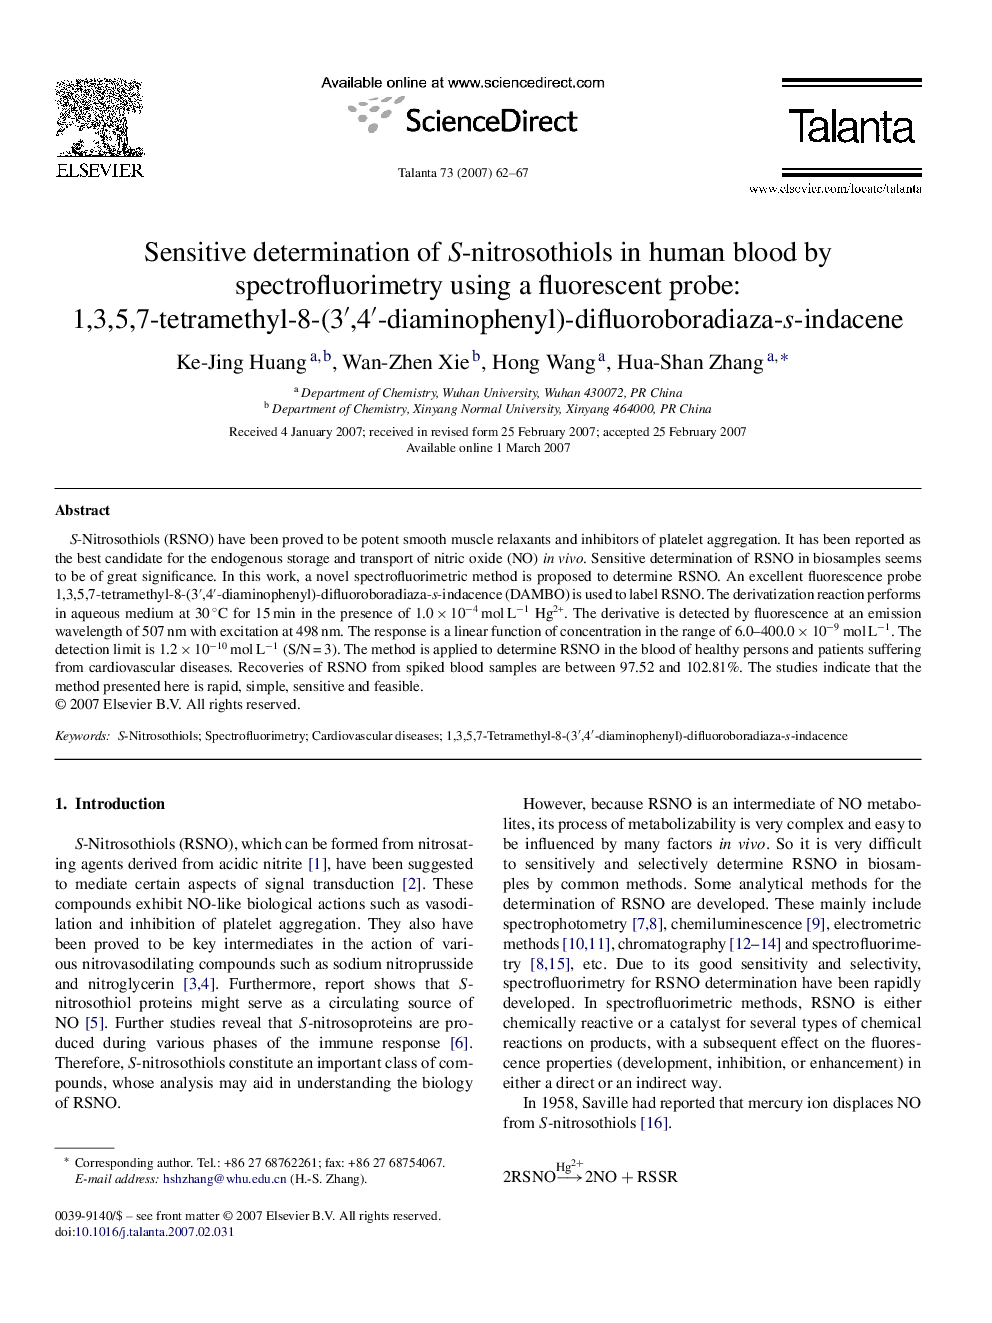 Sensitive determination of S-nitrosothiols in human blood by spectrofluorimetry using a fluorescent probe: 1,3,5,7-tetramethyl-8-(3′,4′-diaminophenyl)-difluoroboradiaza-s-indacene